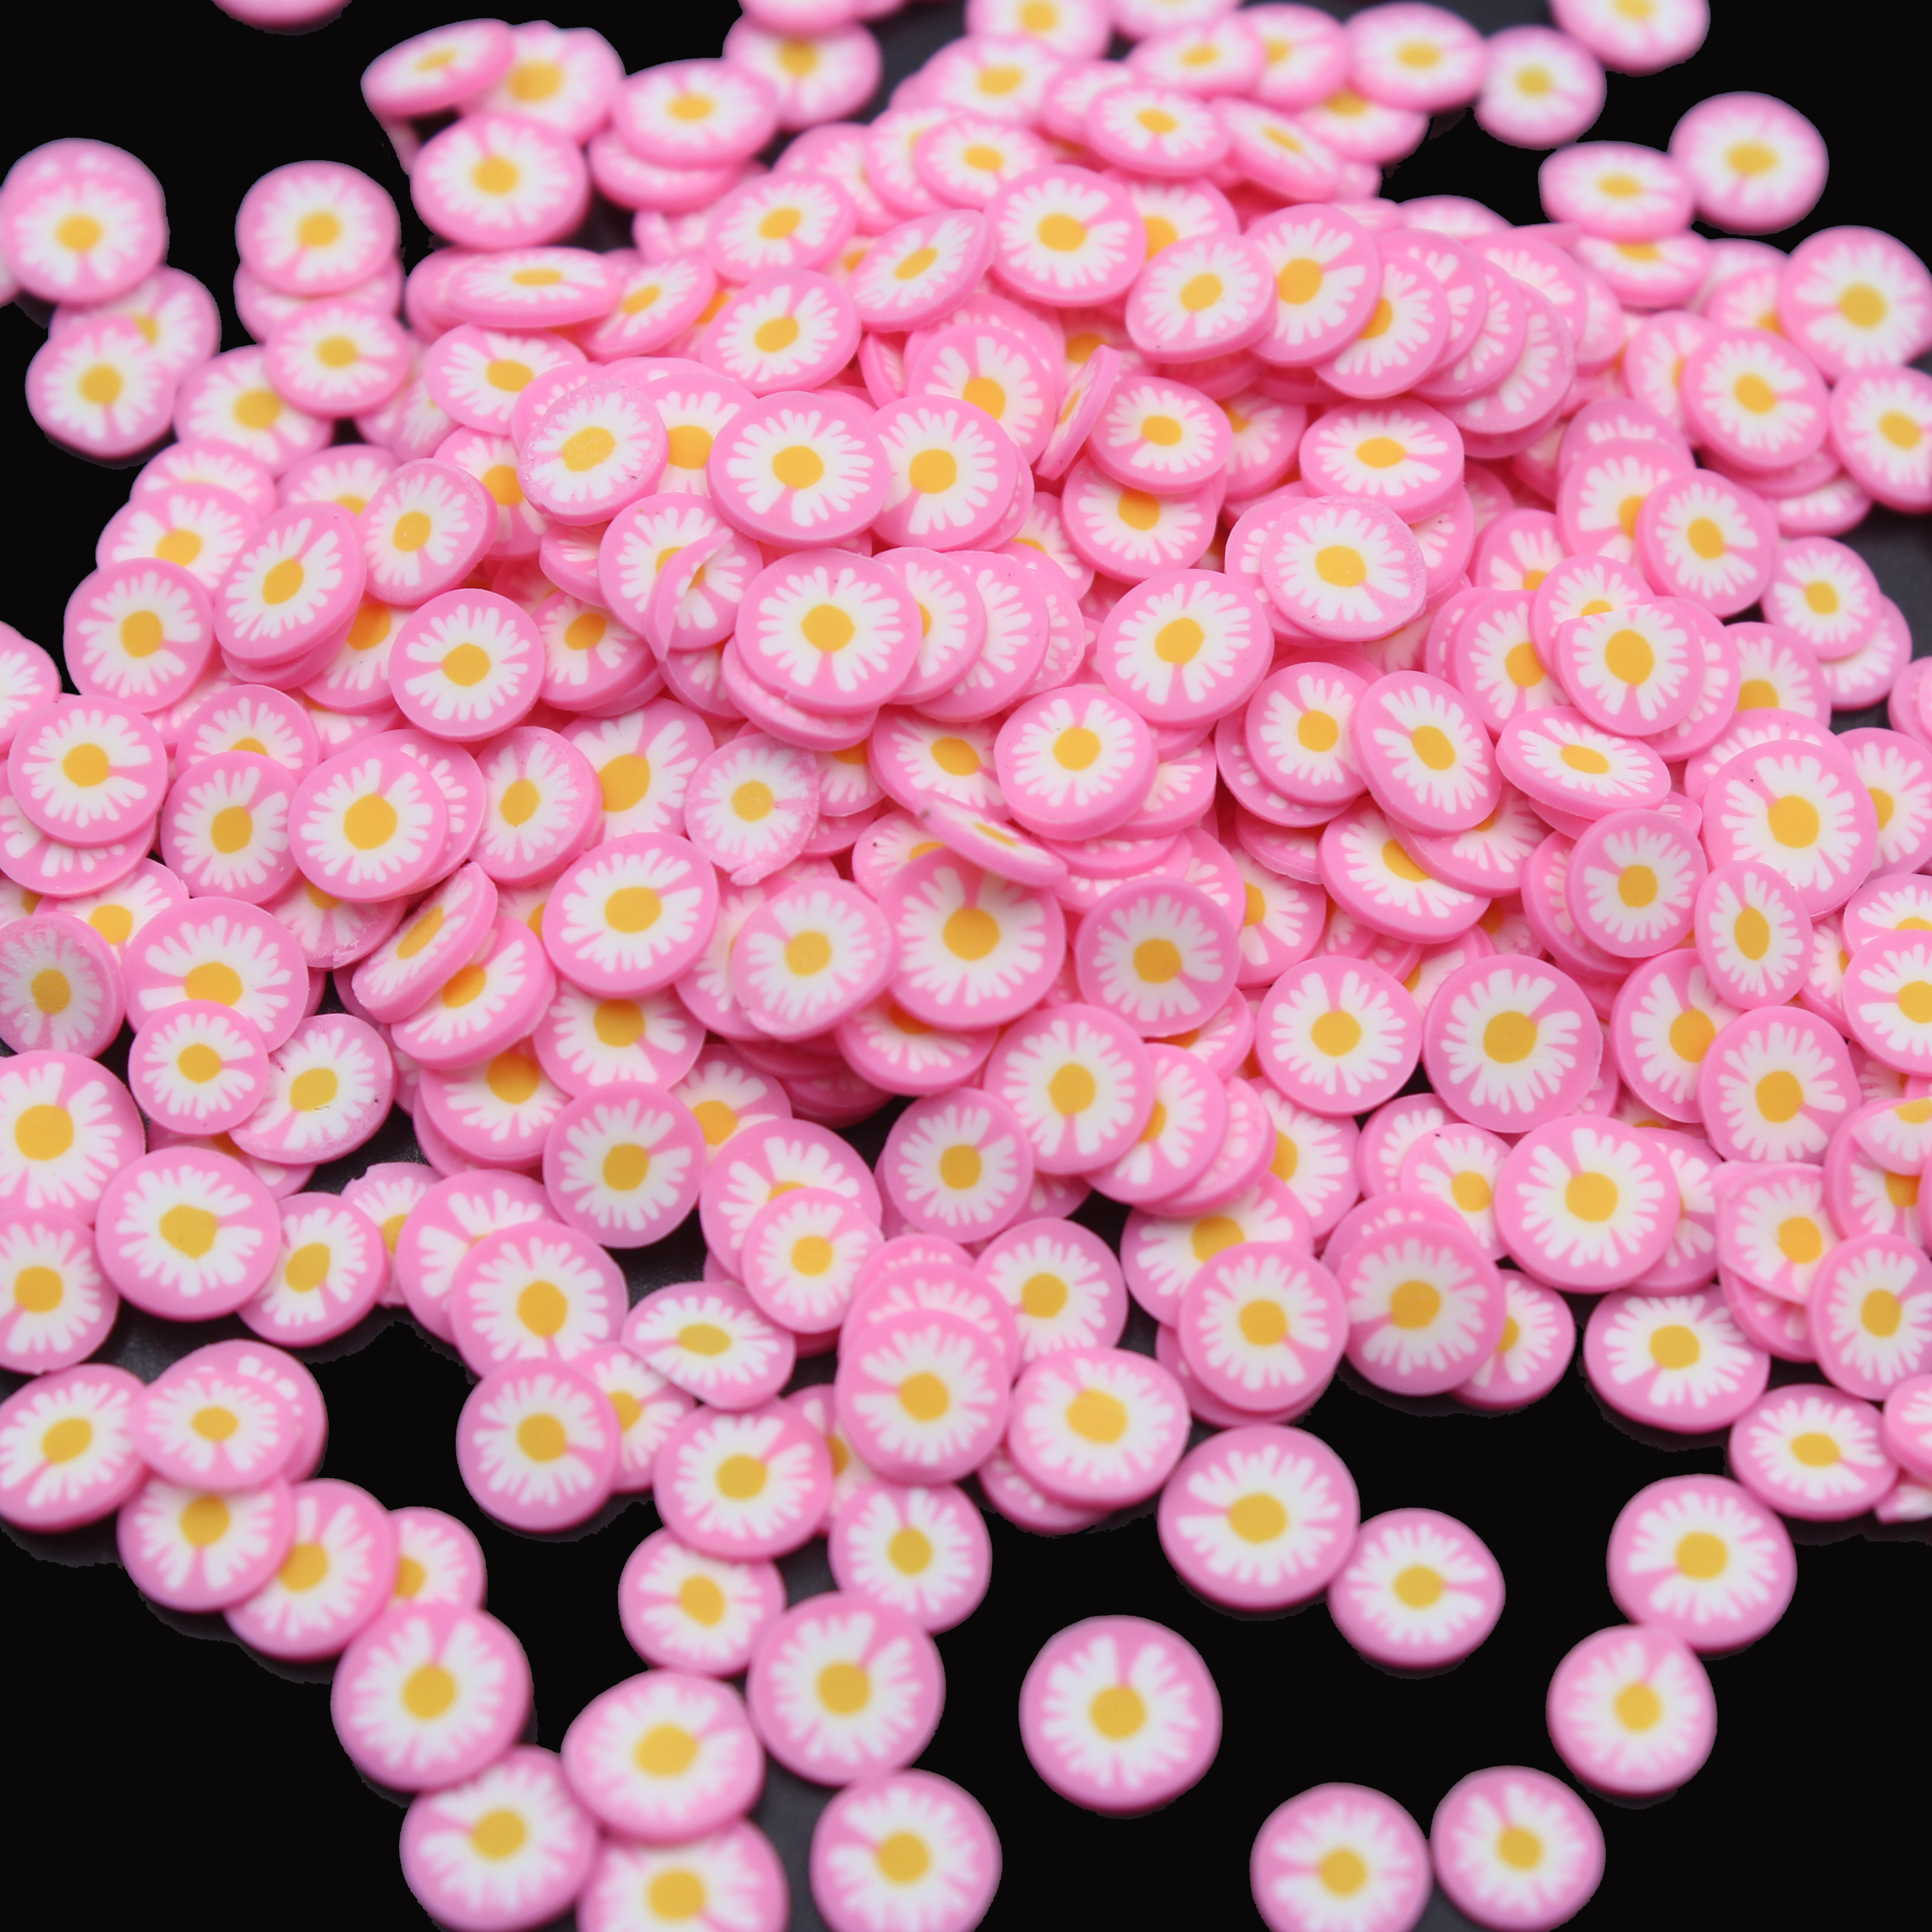 50g/lot Nice Daisy Polymer Hot Soft Popular Flower Slices Sprinkles for Crafts Making, DIY Filler Accessories